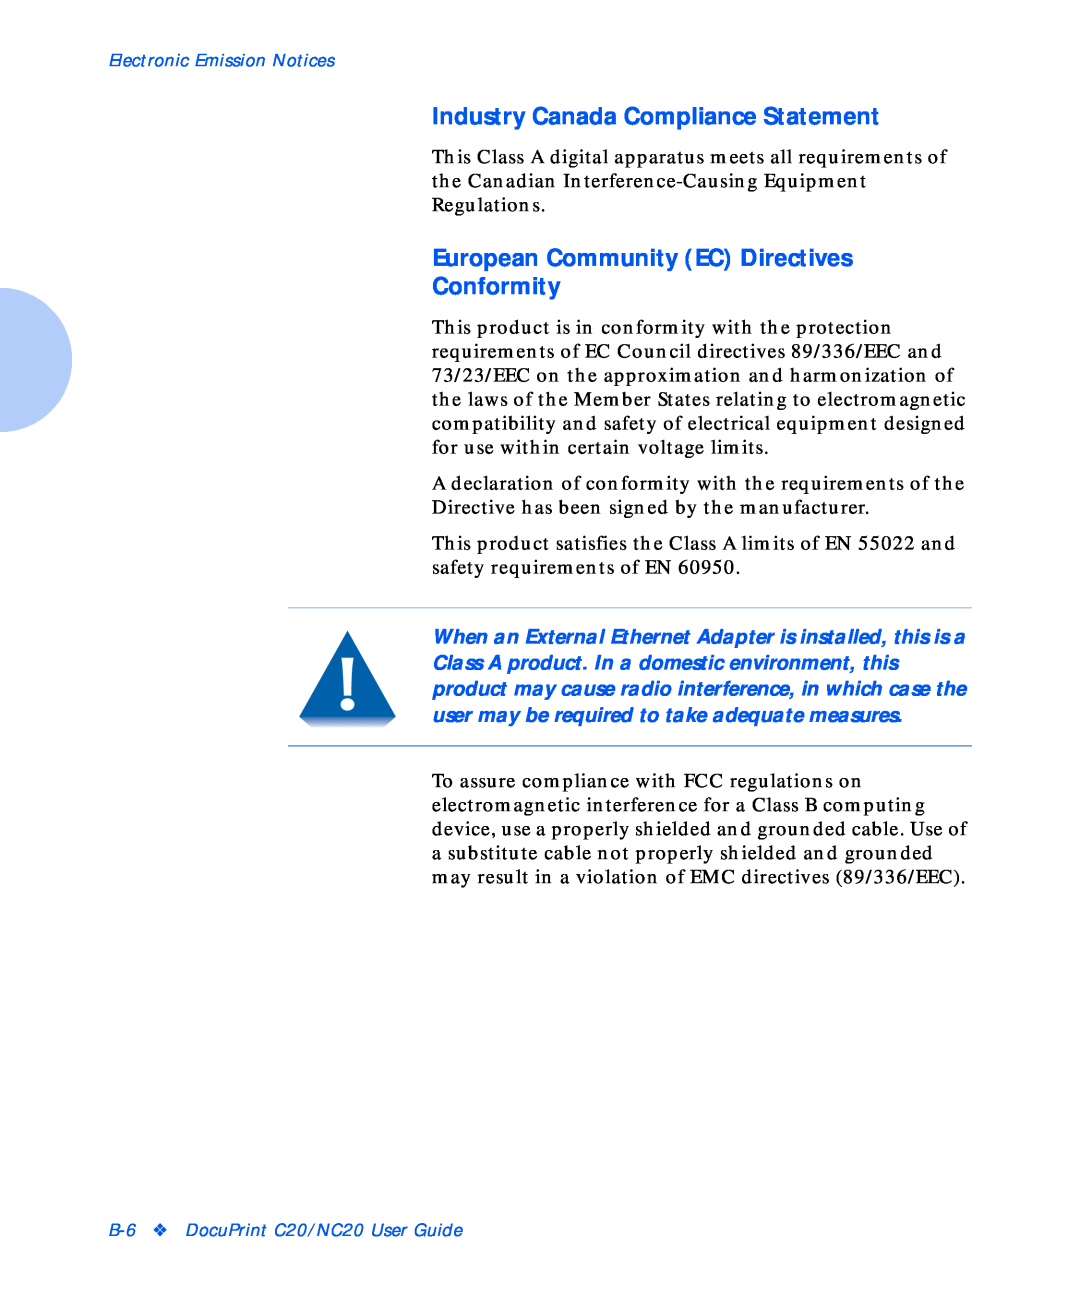 Xerox NC20 manual Industry Canada Compliance Statement, European Community EC Directives Conformity 